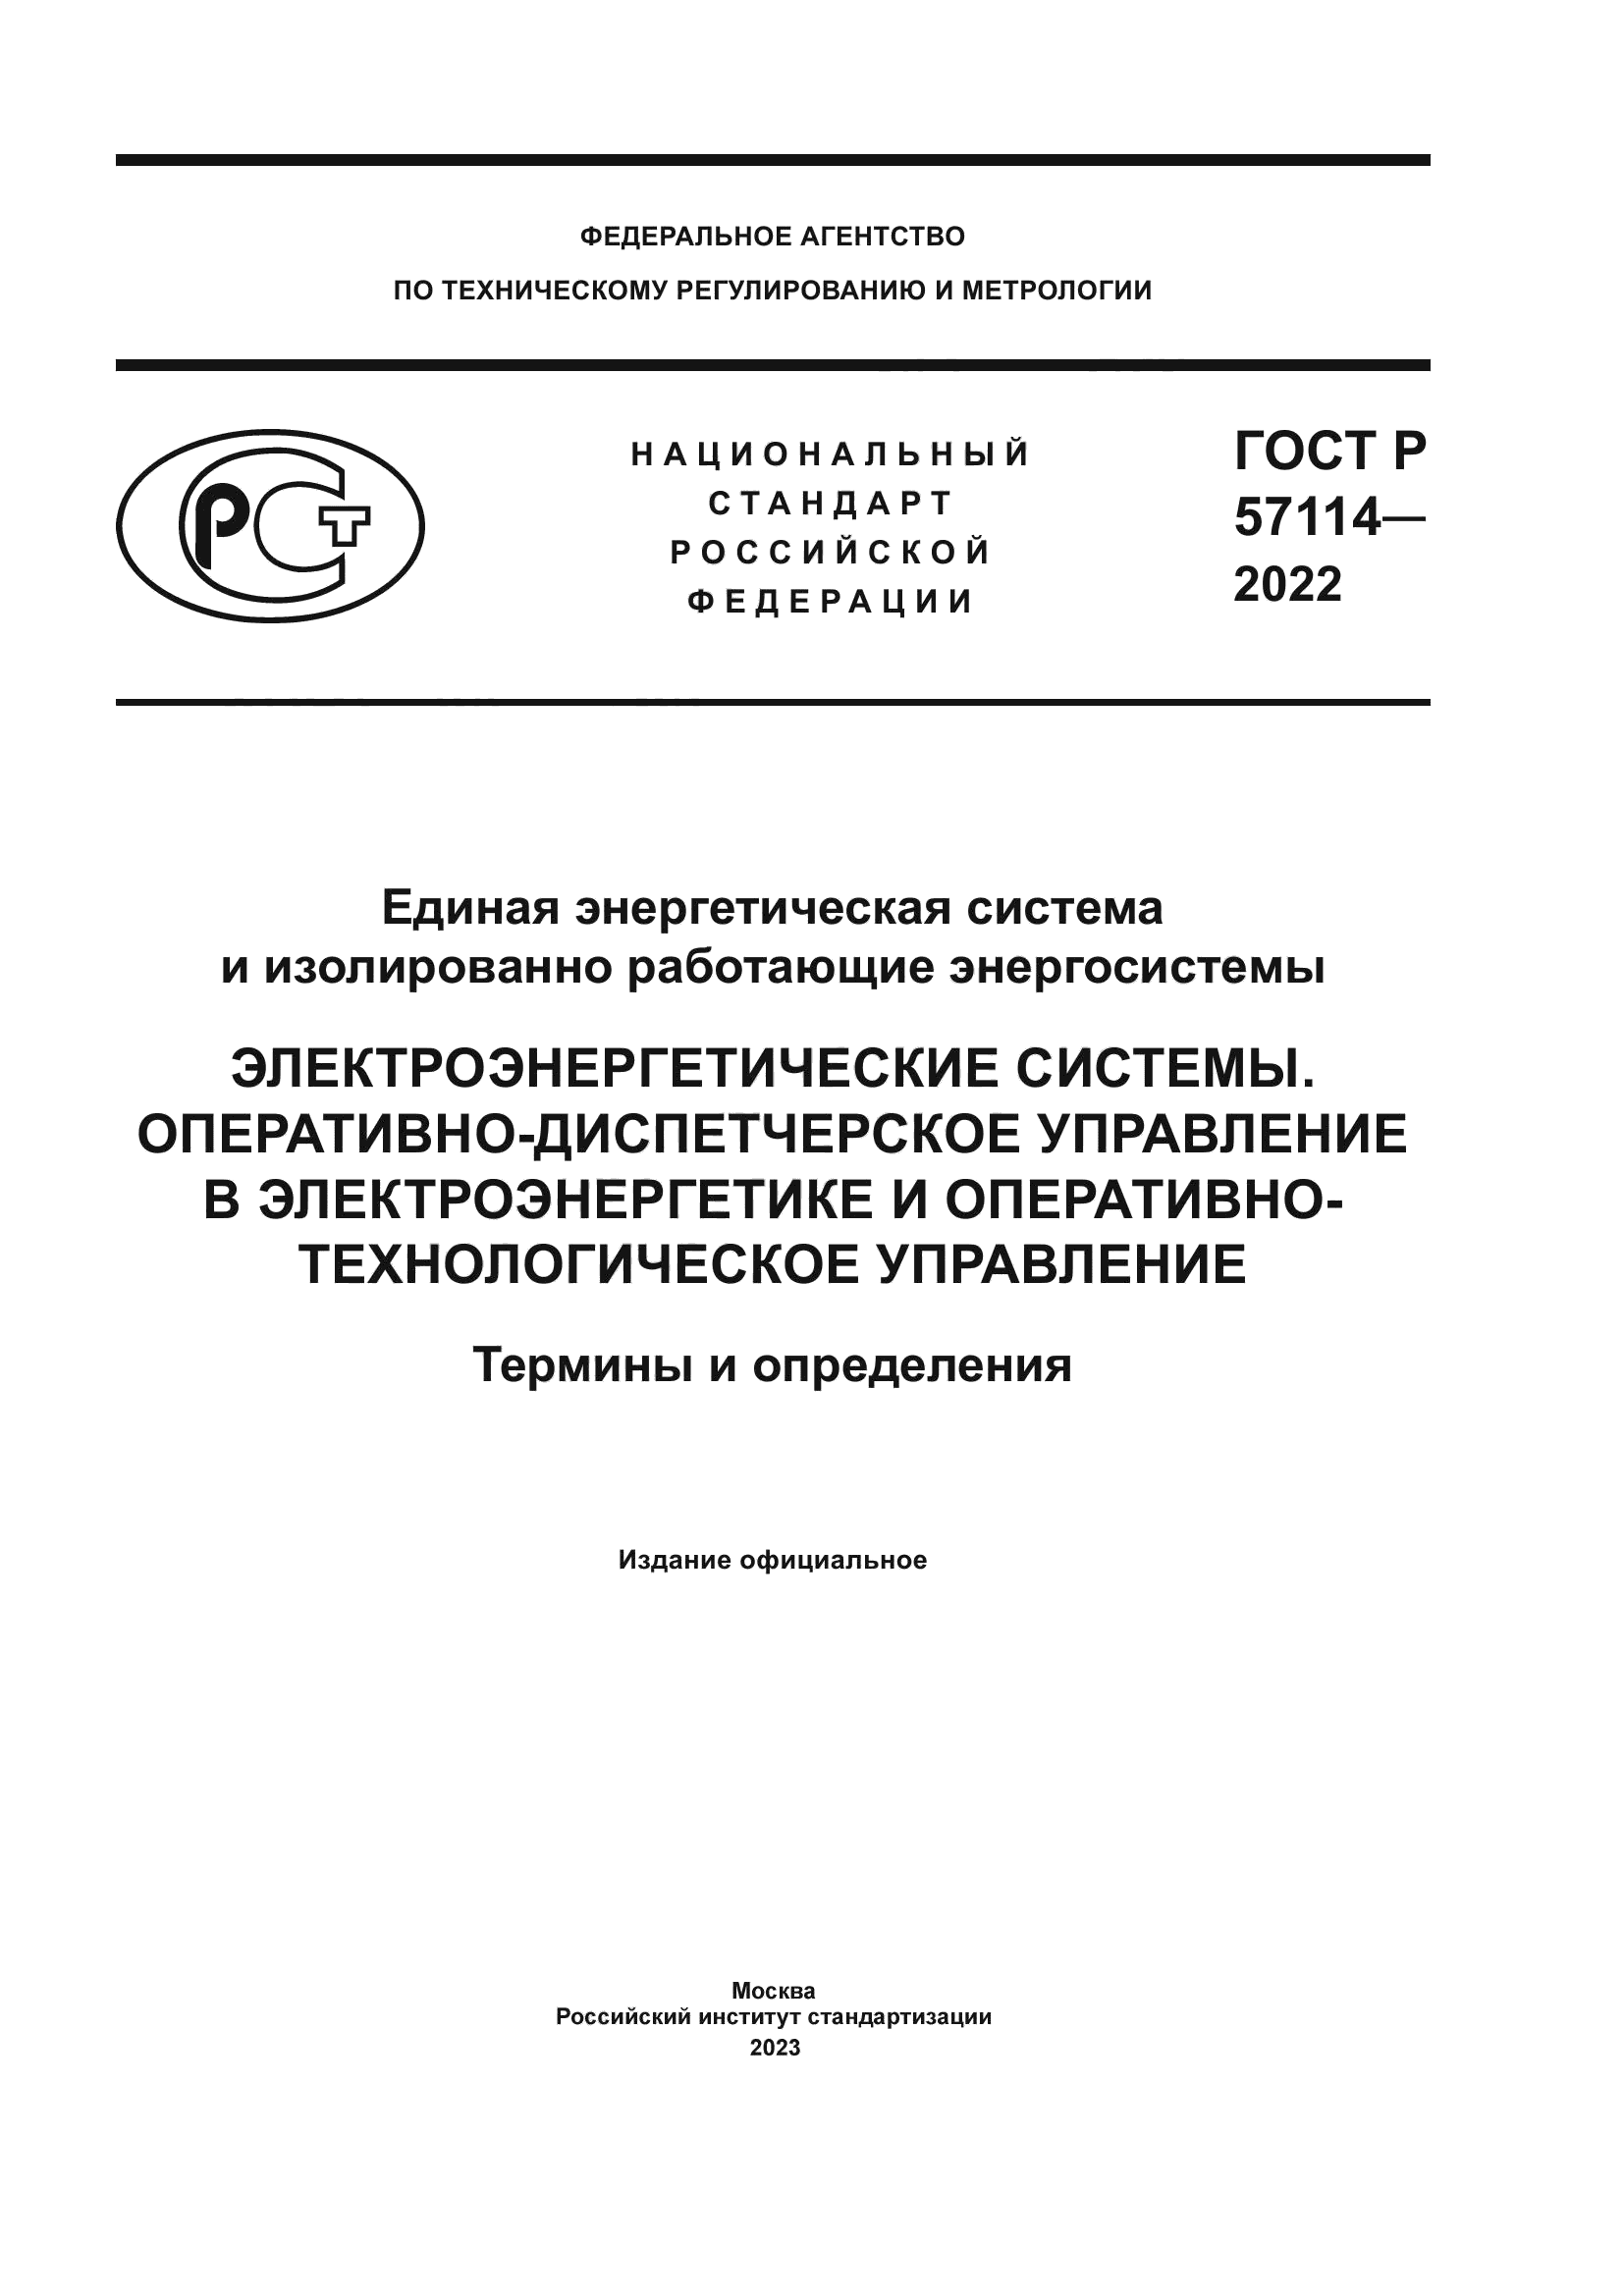 ГОСТ Р 57114-2022